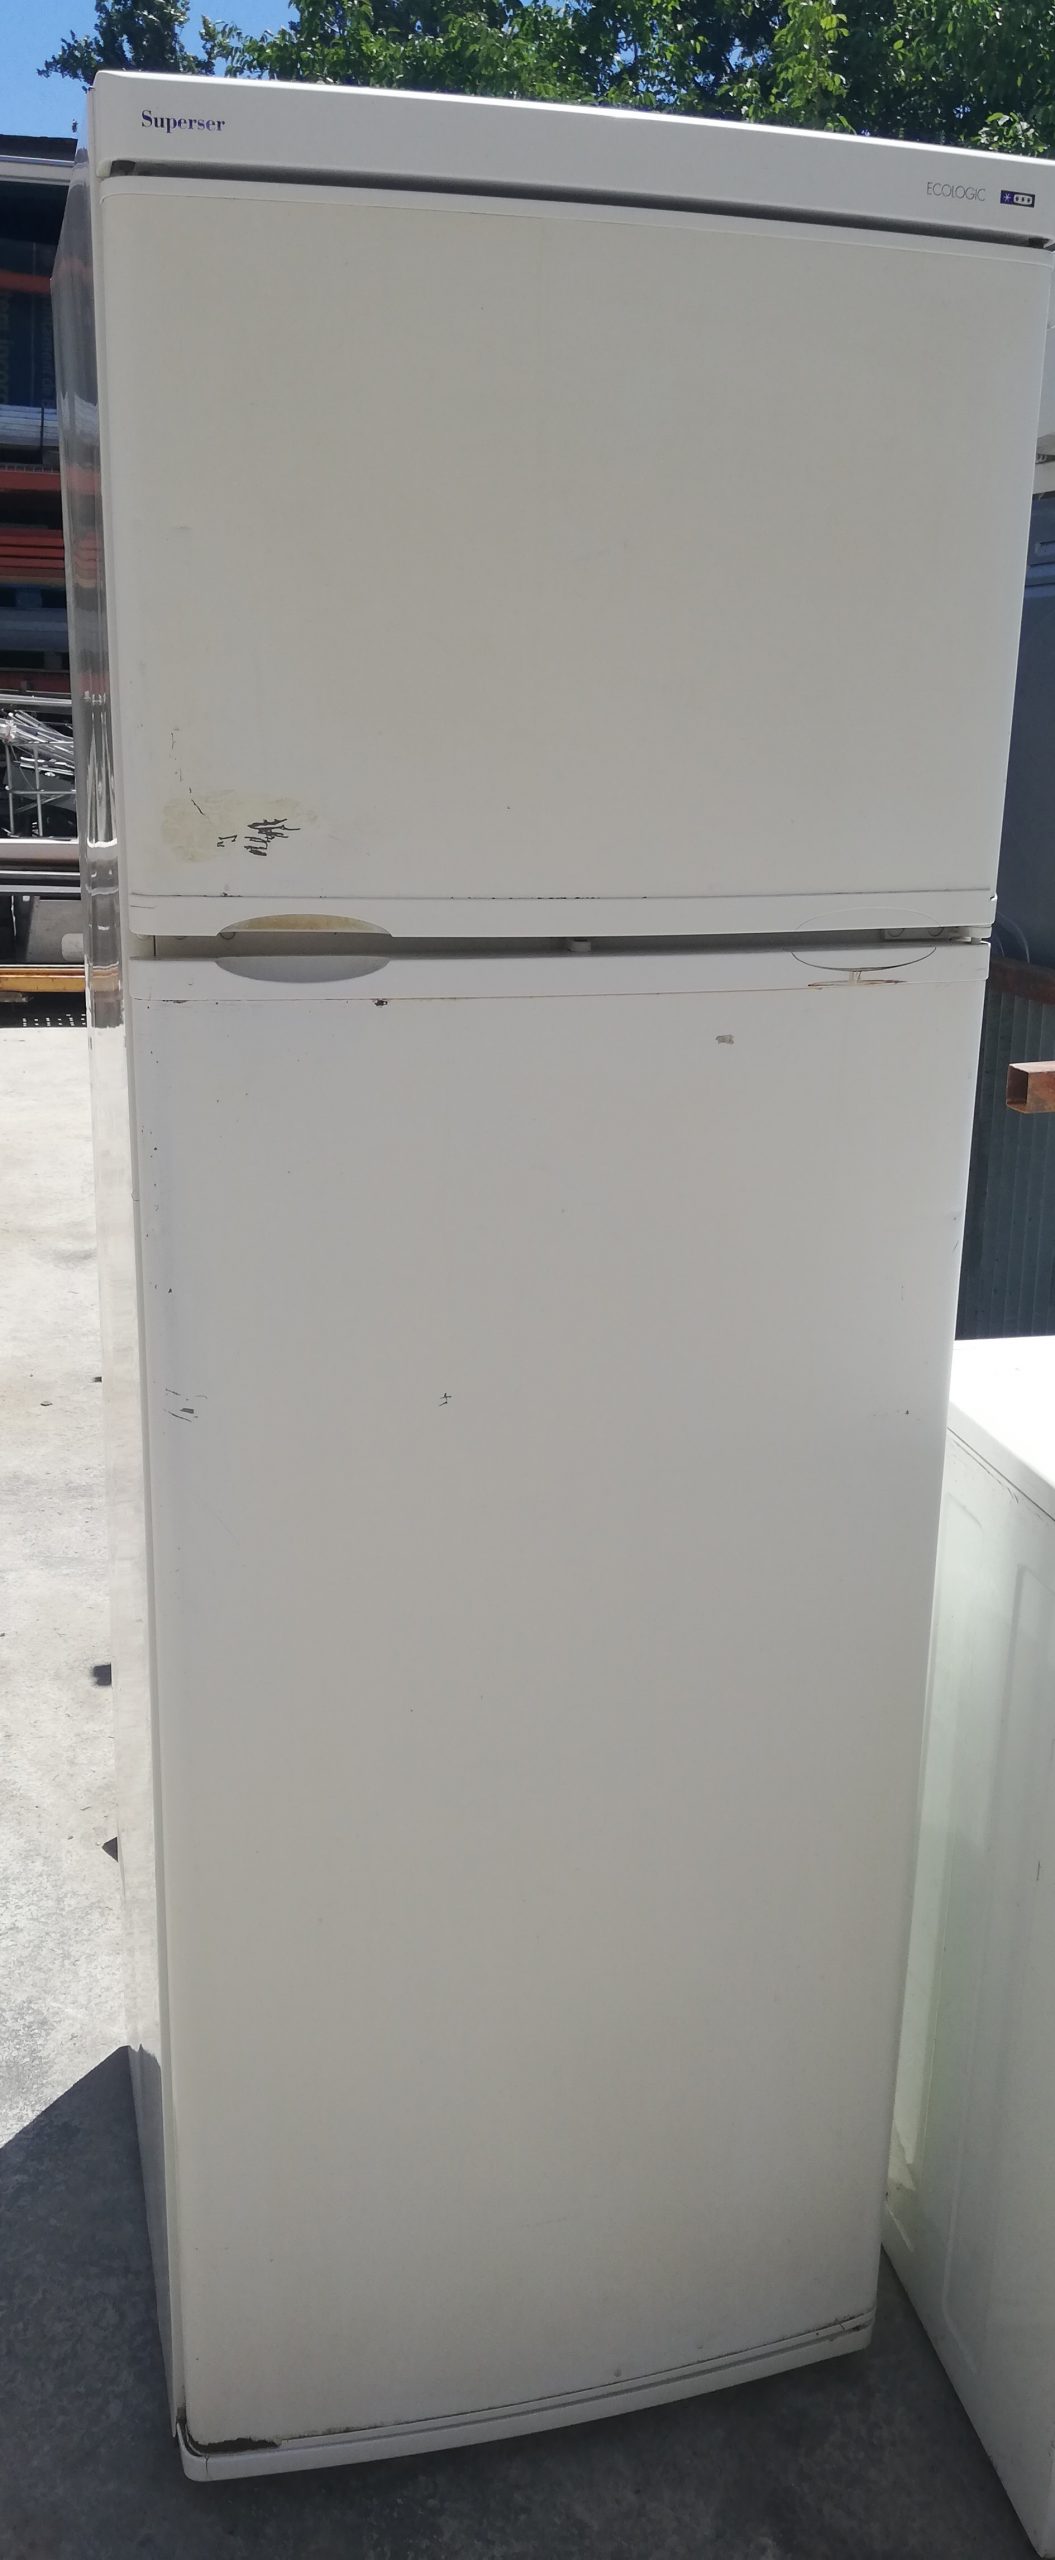 Superser Neveras, frigoríficos de segunda mano baratos